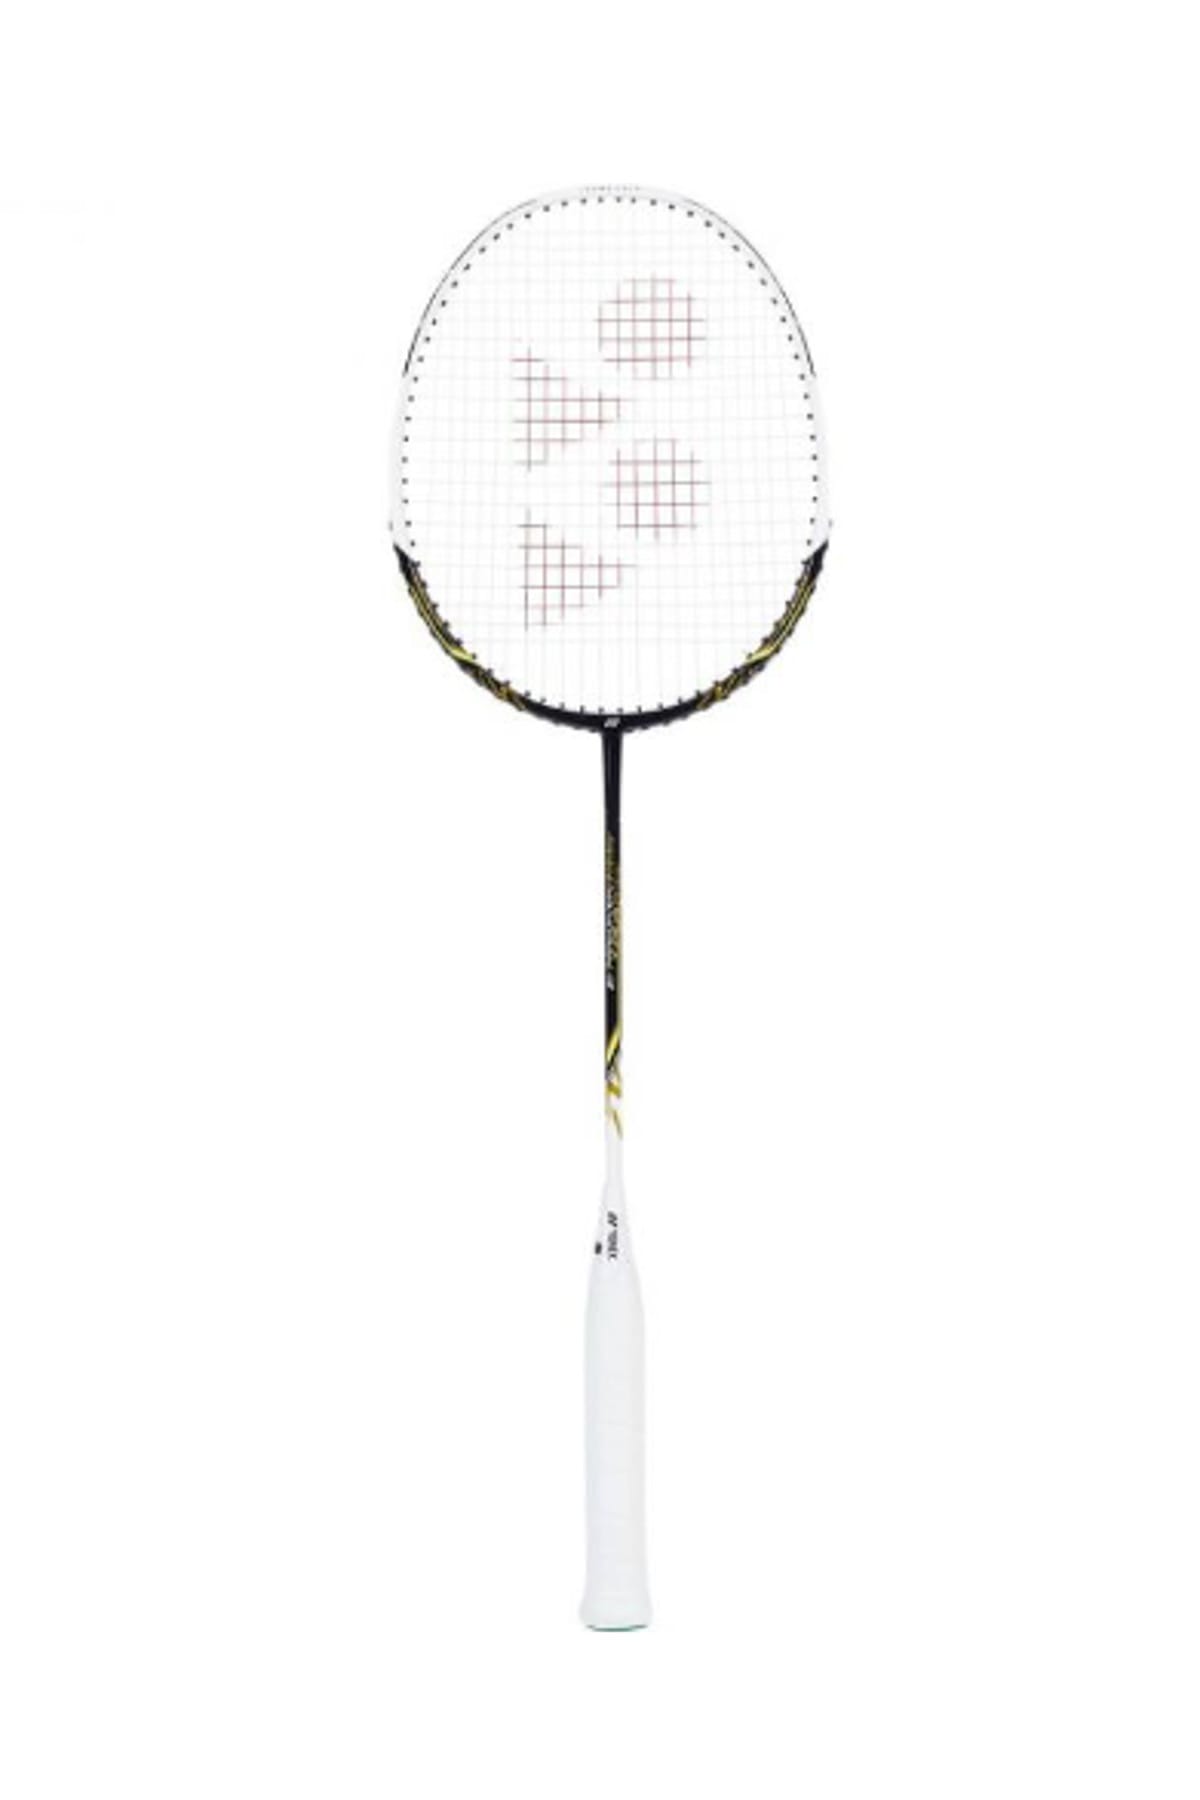 Unisex Badminton Raketi - Nanoray 3 88Gr - YNNR3